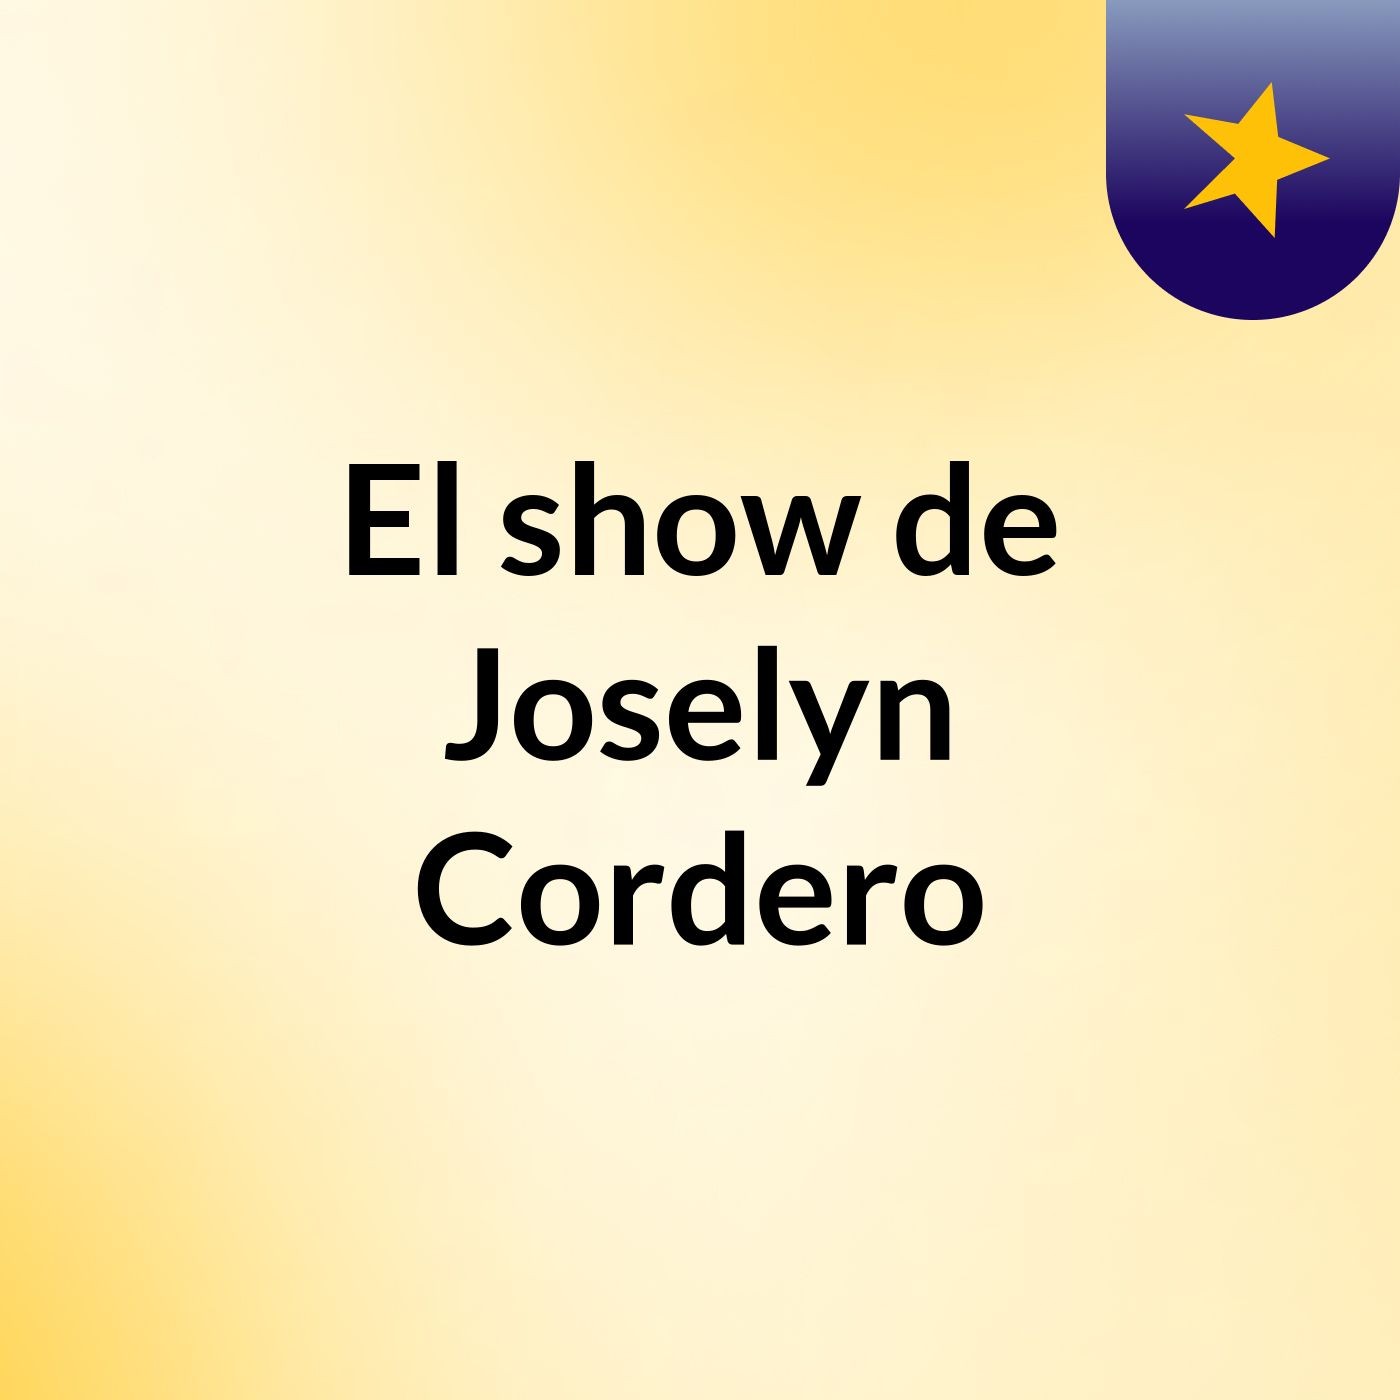 El show de Joselyn Cordero